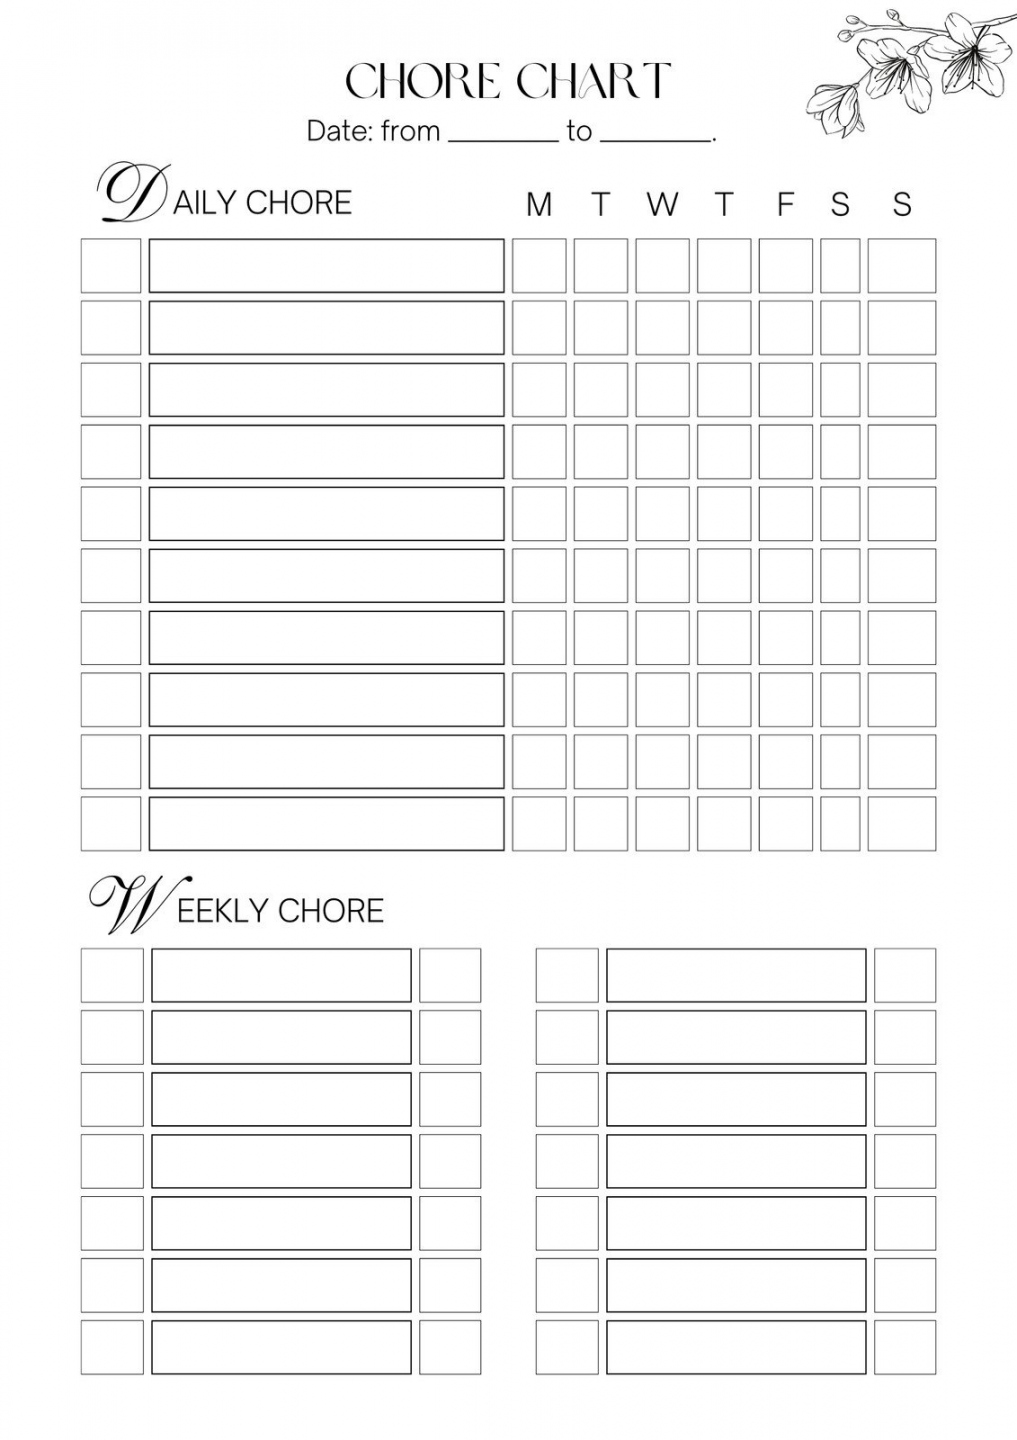 Free customizable chore chart templates to print  Canva - FREE Printables - Weekly Chore Chart Free Printable